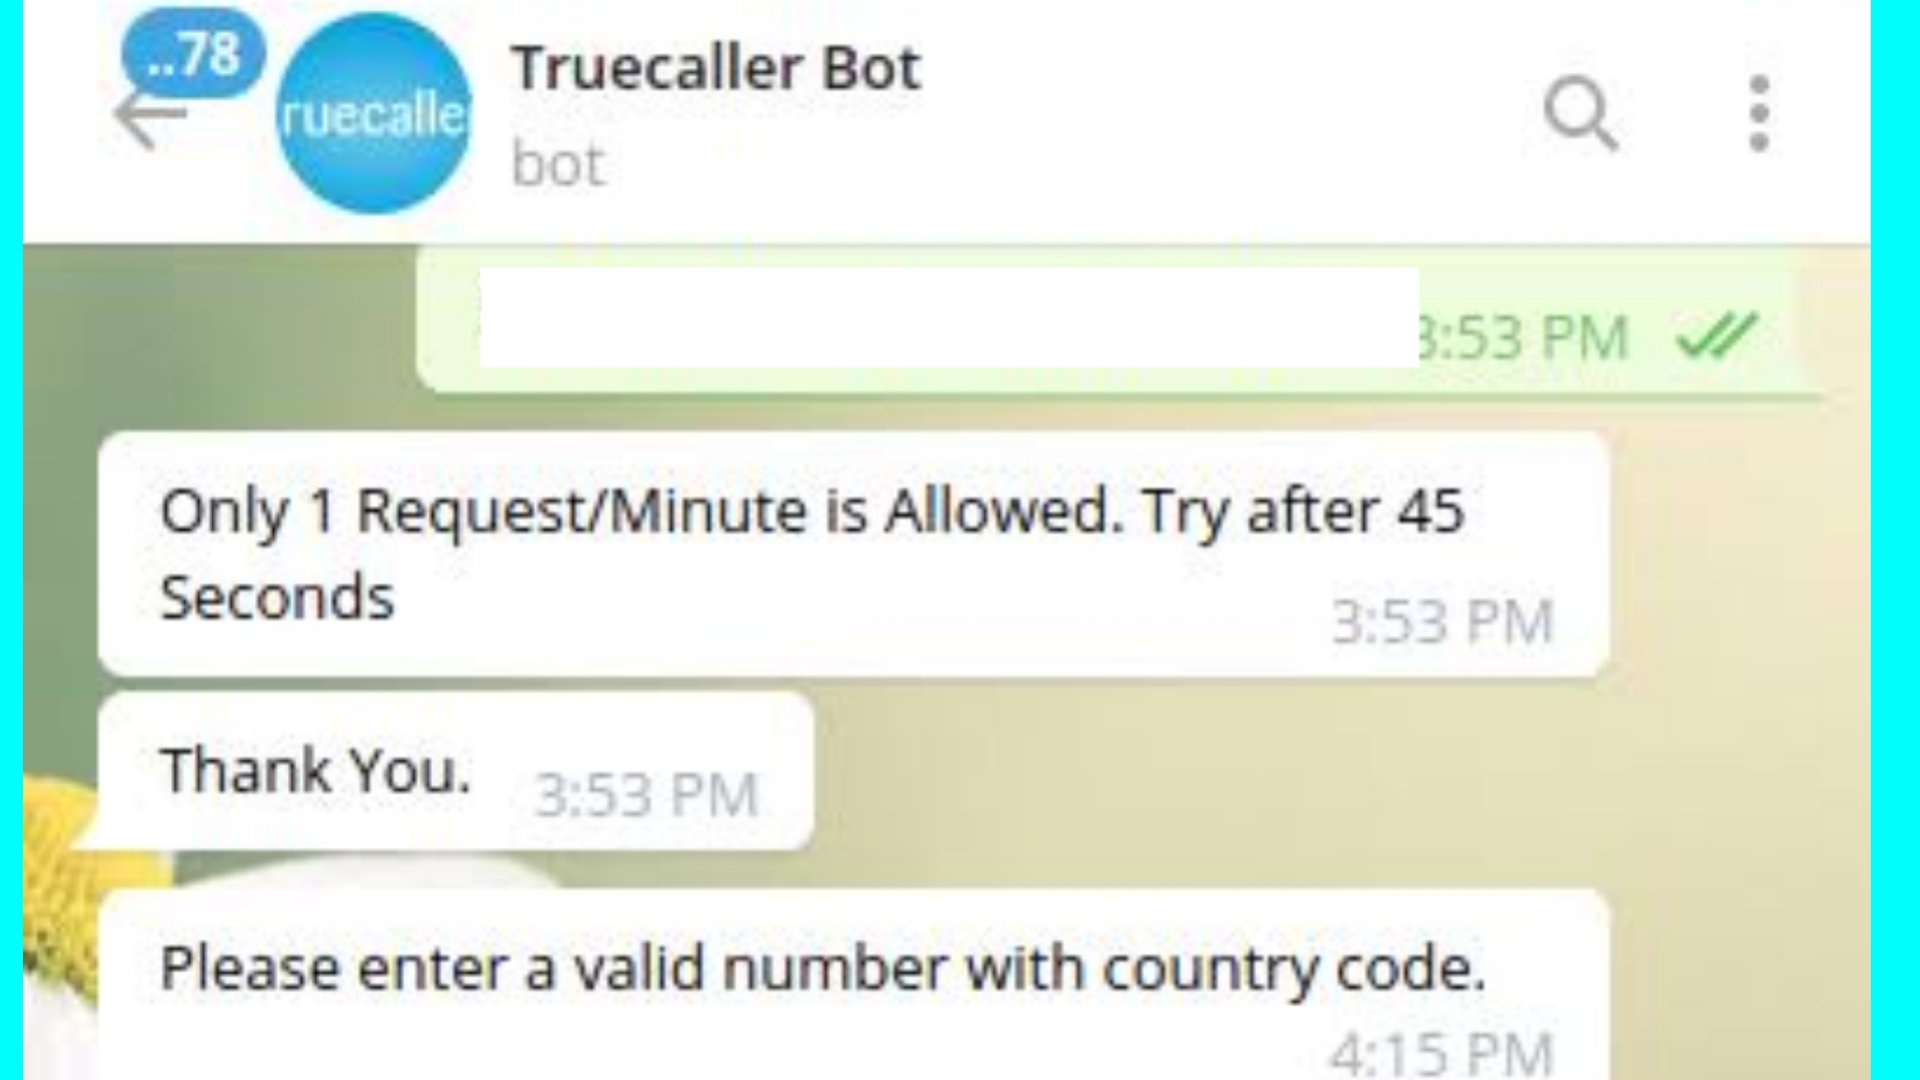 Best Telegram bots to use